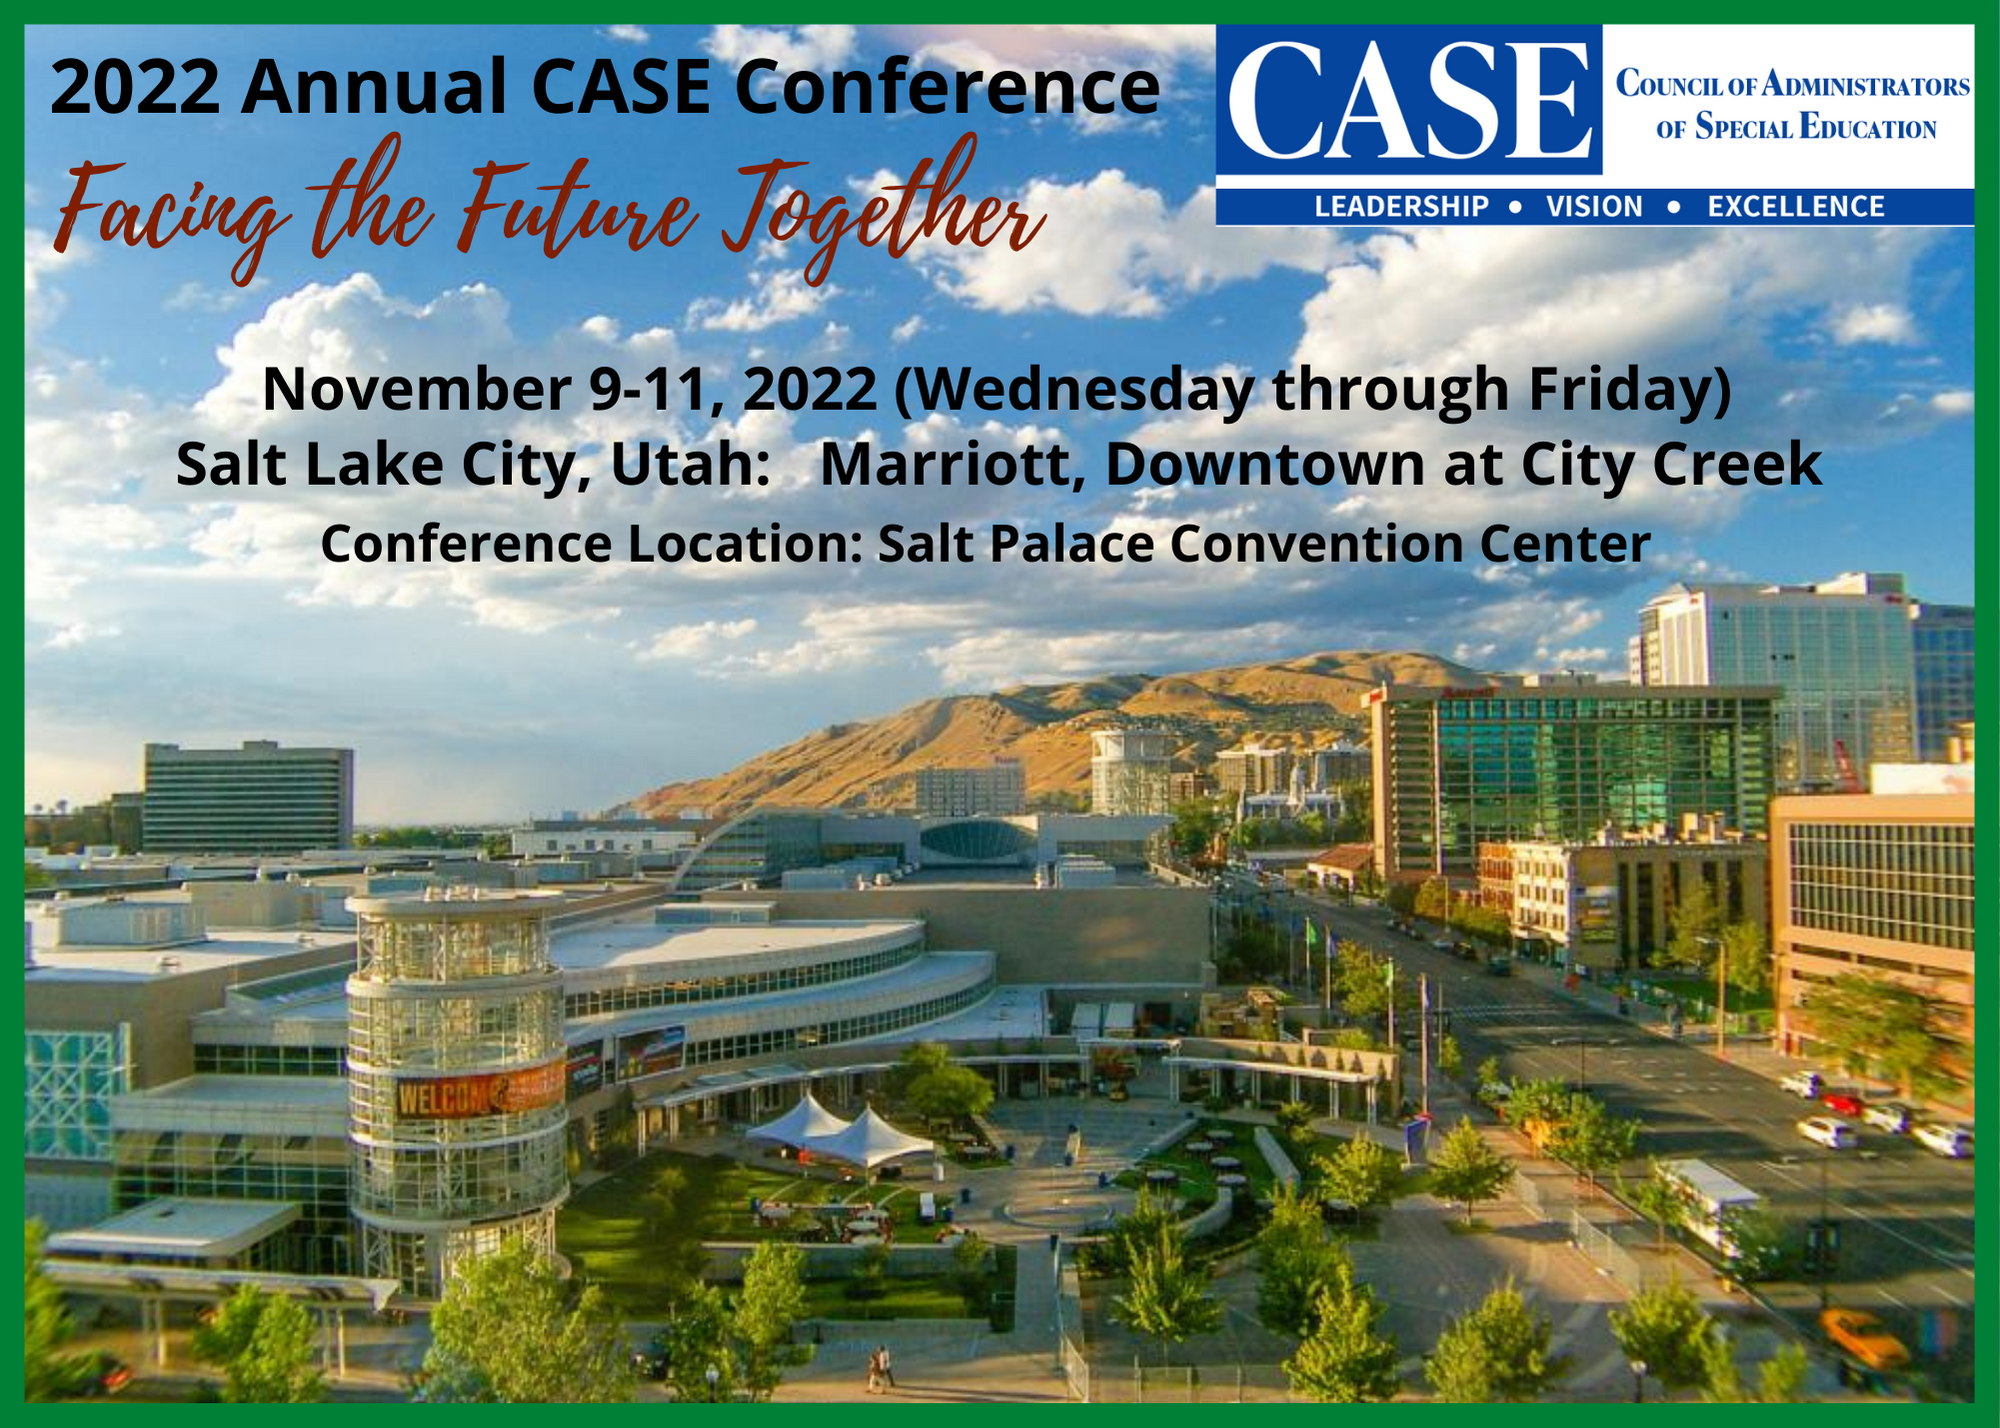 2022 Annual CASE Conference Ad, Facing the Future Together, November 9-11, 2022; Salt Lake City Utah